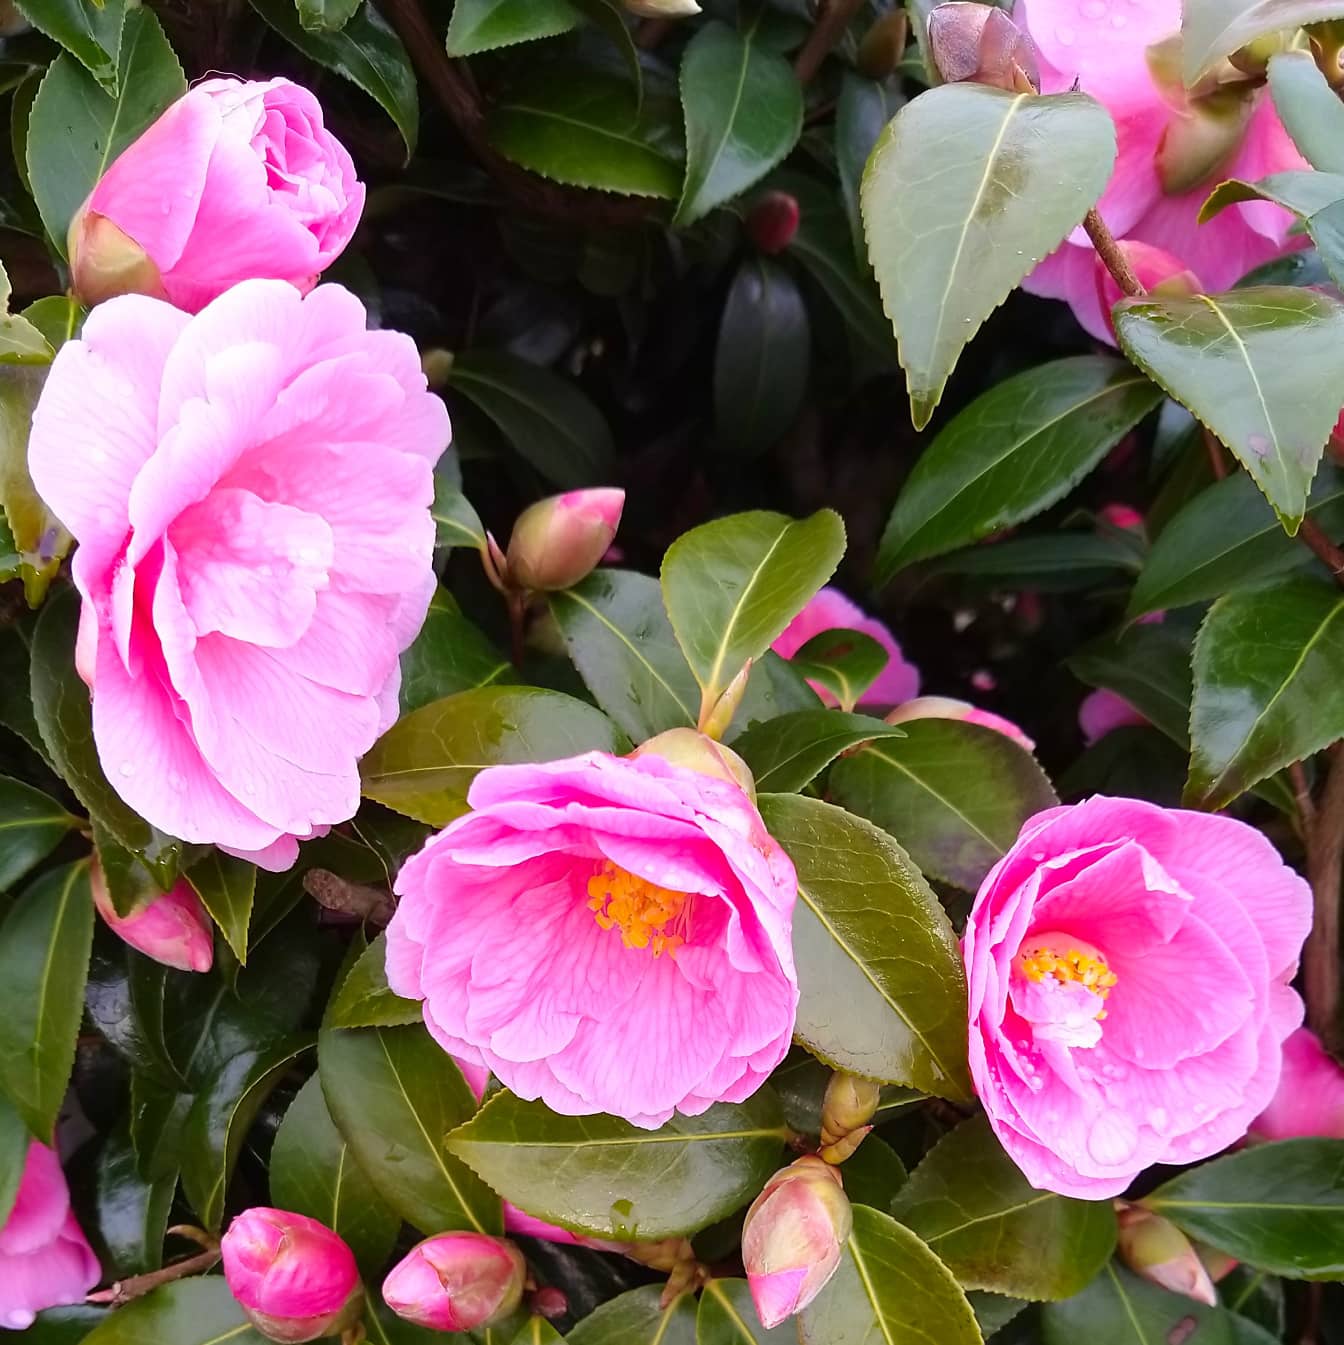 Pink Japanese camellia (Camellia japonica) shrub